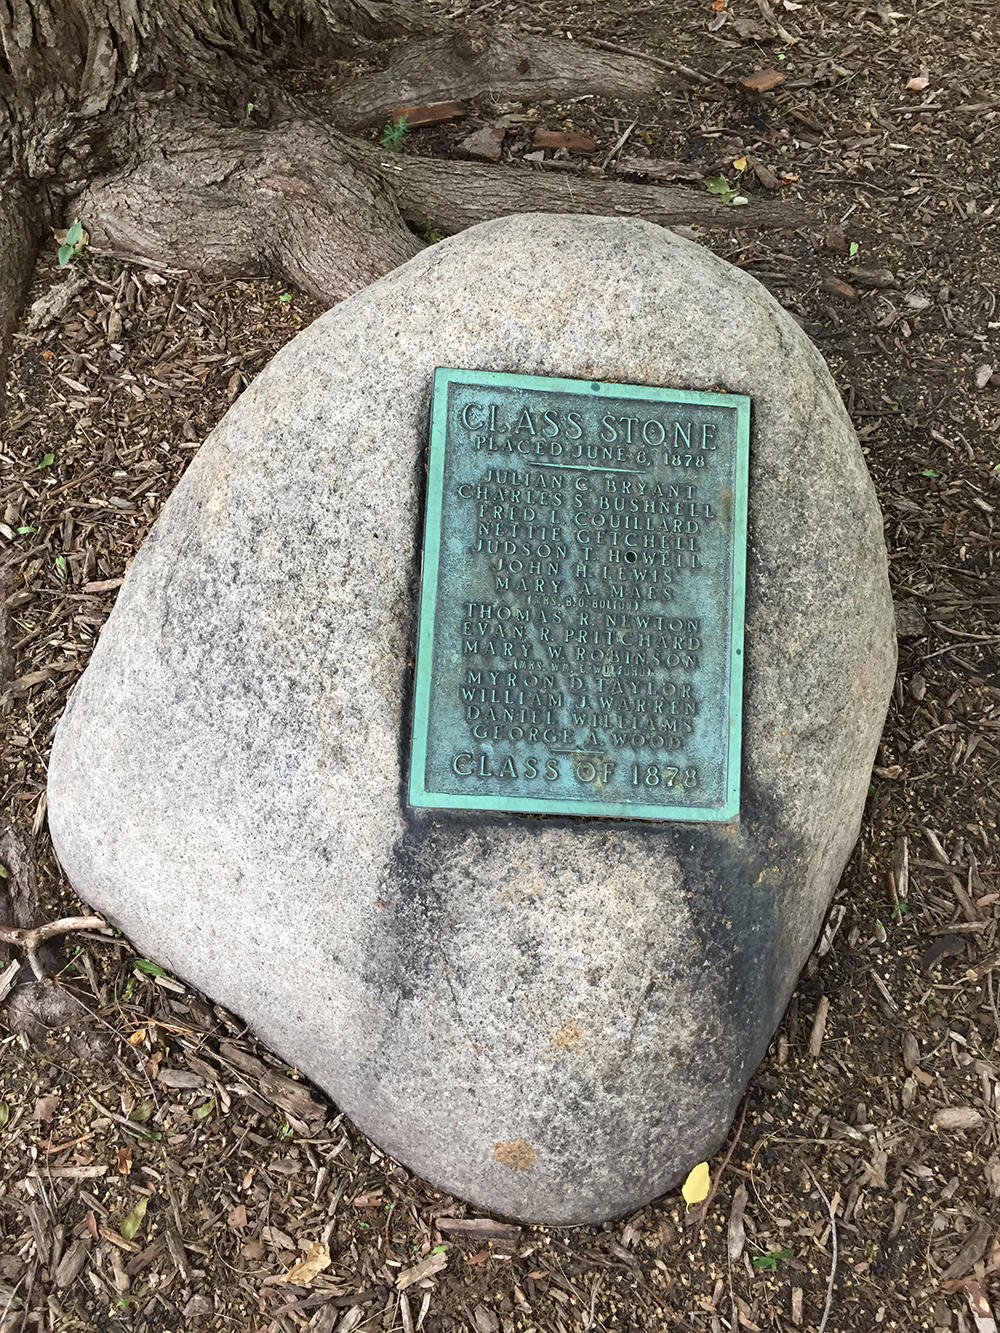 1878 Memorial boulder with plaque